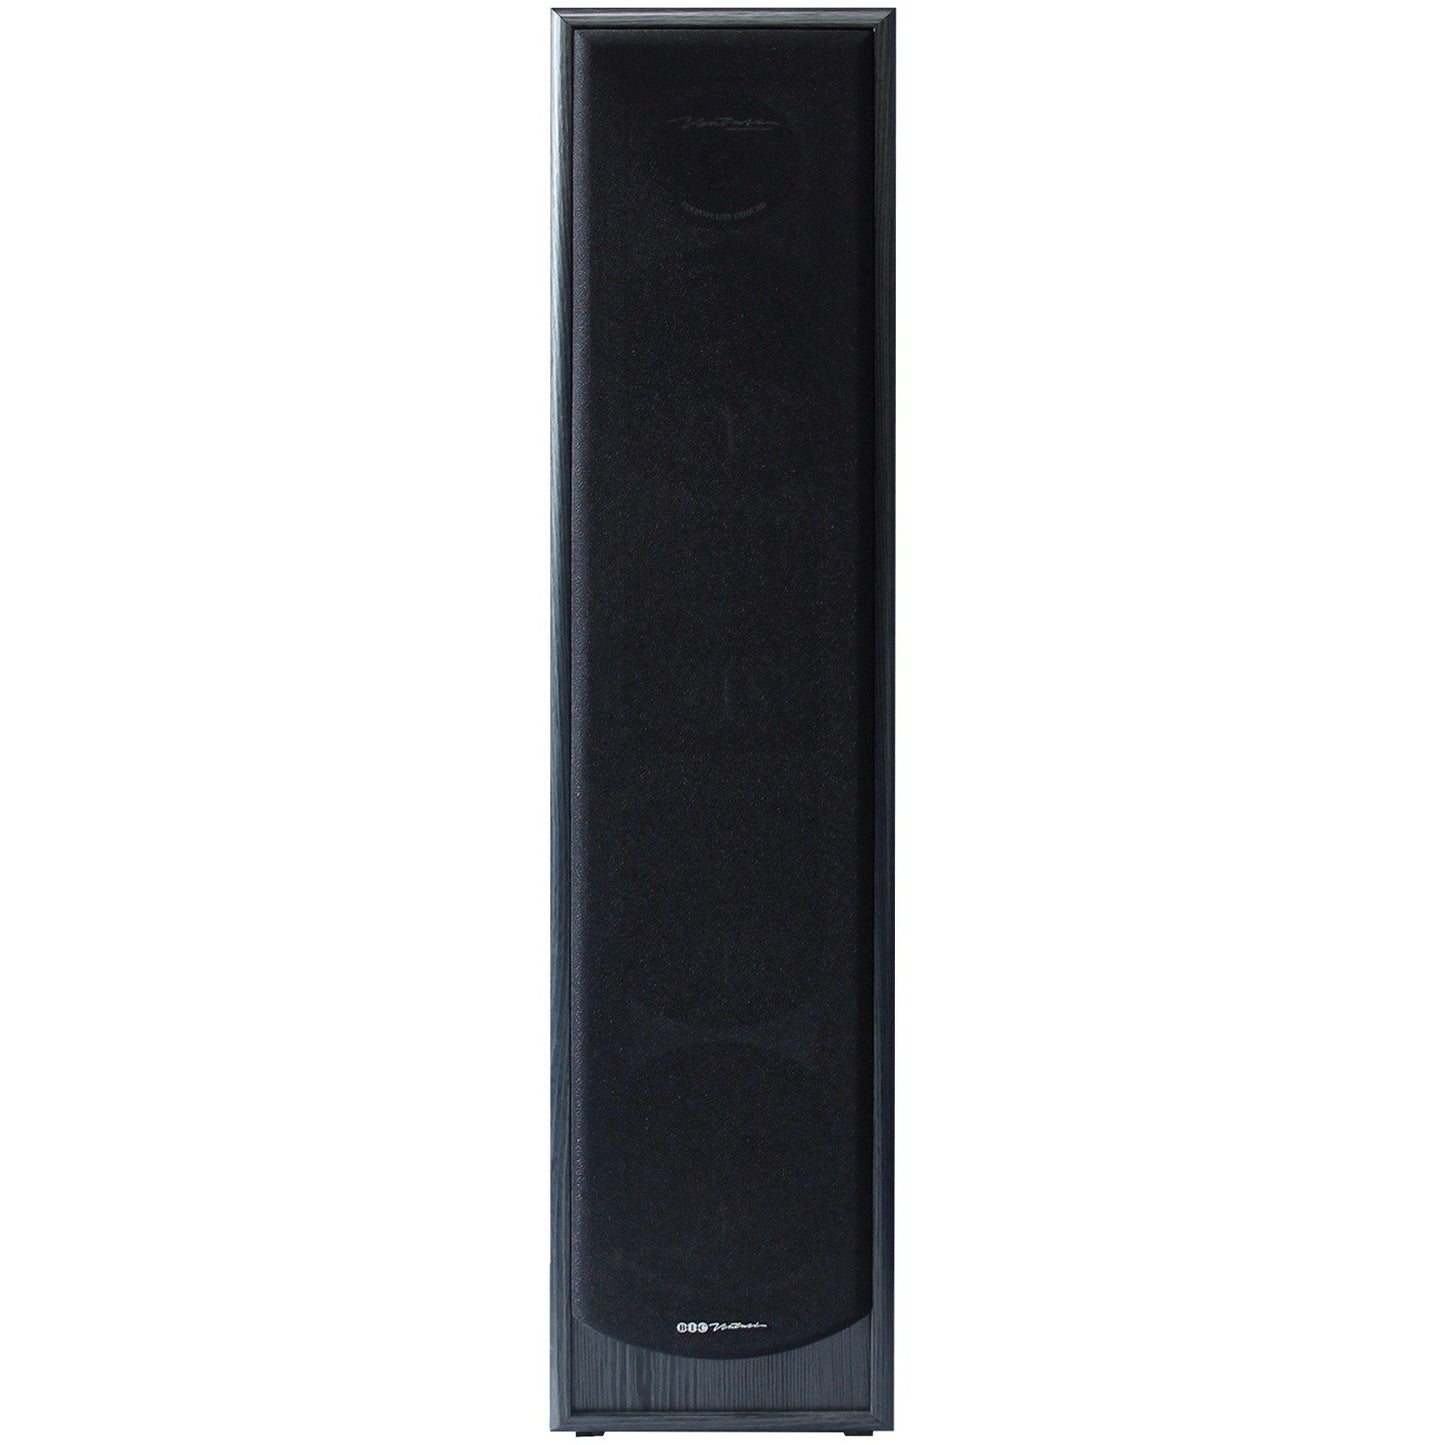 BIC AMERICA BICDV64 Slim Tower Speaker for Home Theater & Music (200W, 6.5")